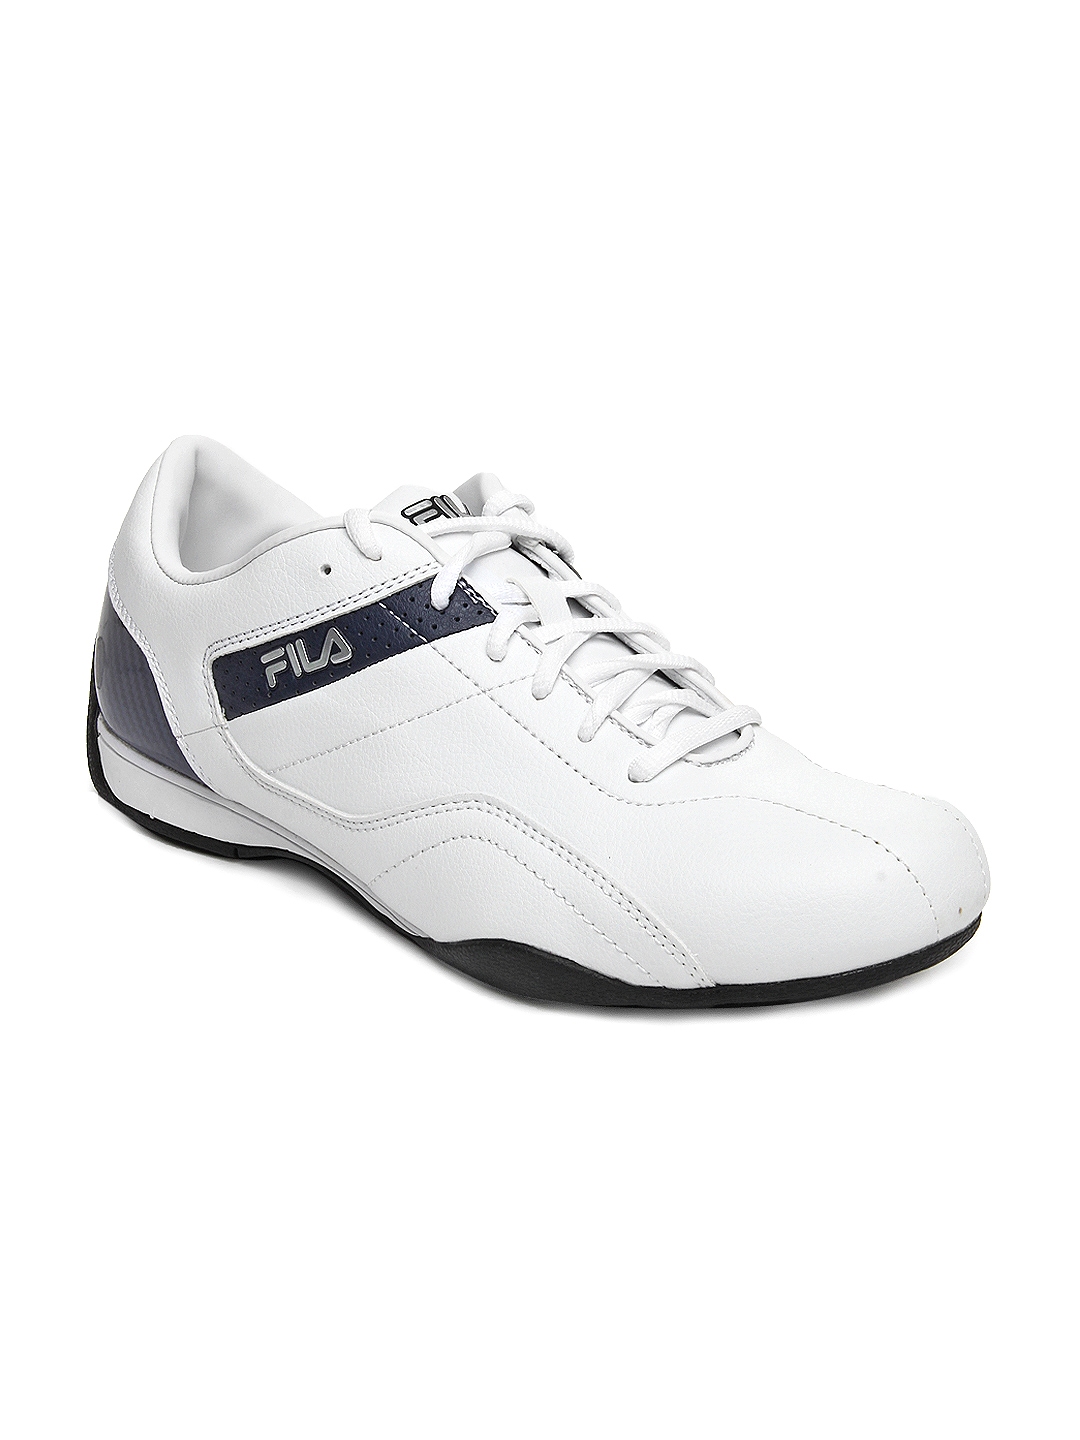 Buy Fila Men White Exalade Casual Shoes - Casual Shoes for Men 223840 ...